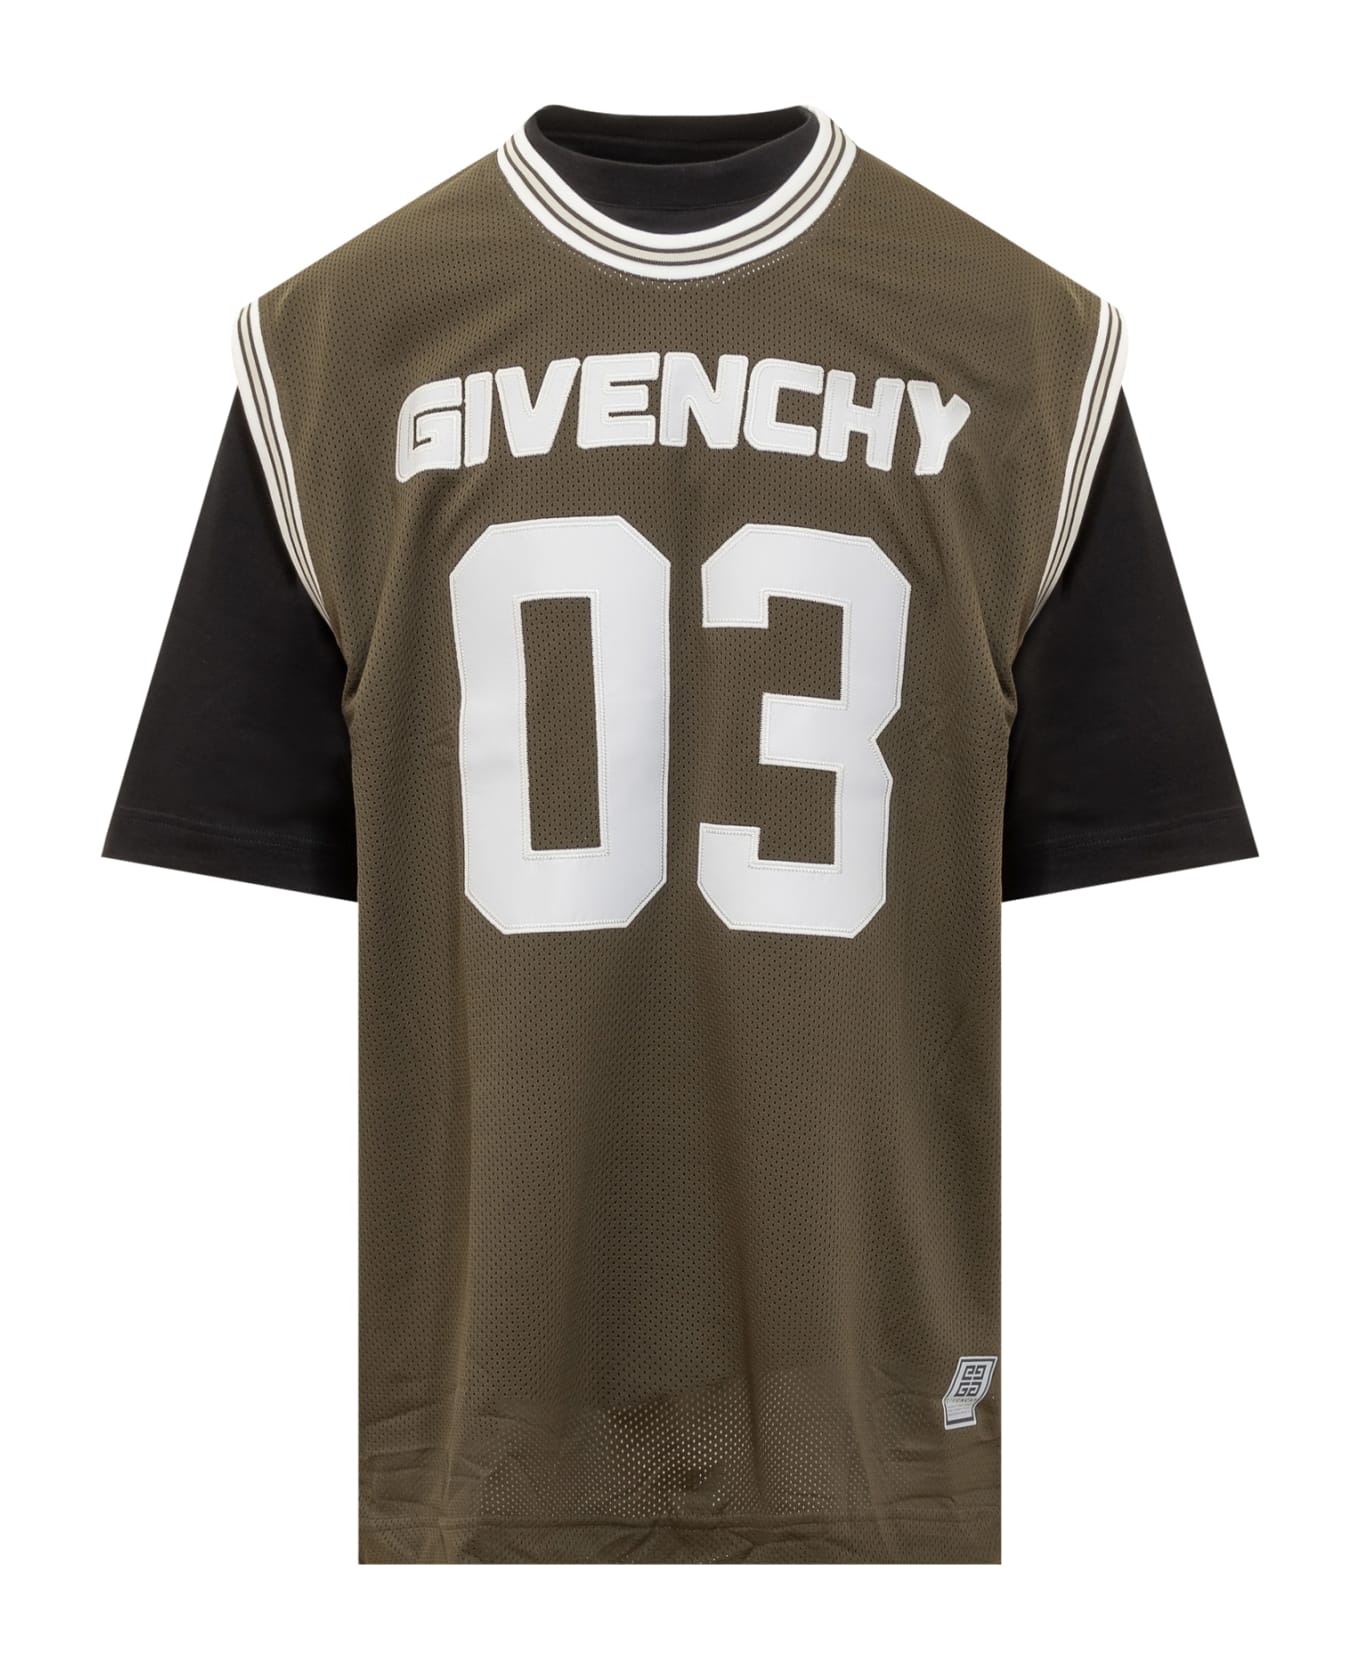 Givenchy Basket Fit T-shirt - BLACK KHAKI